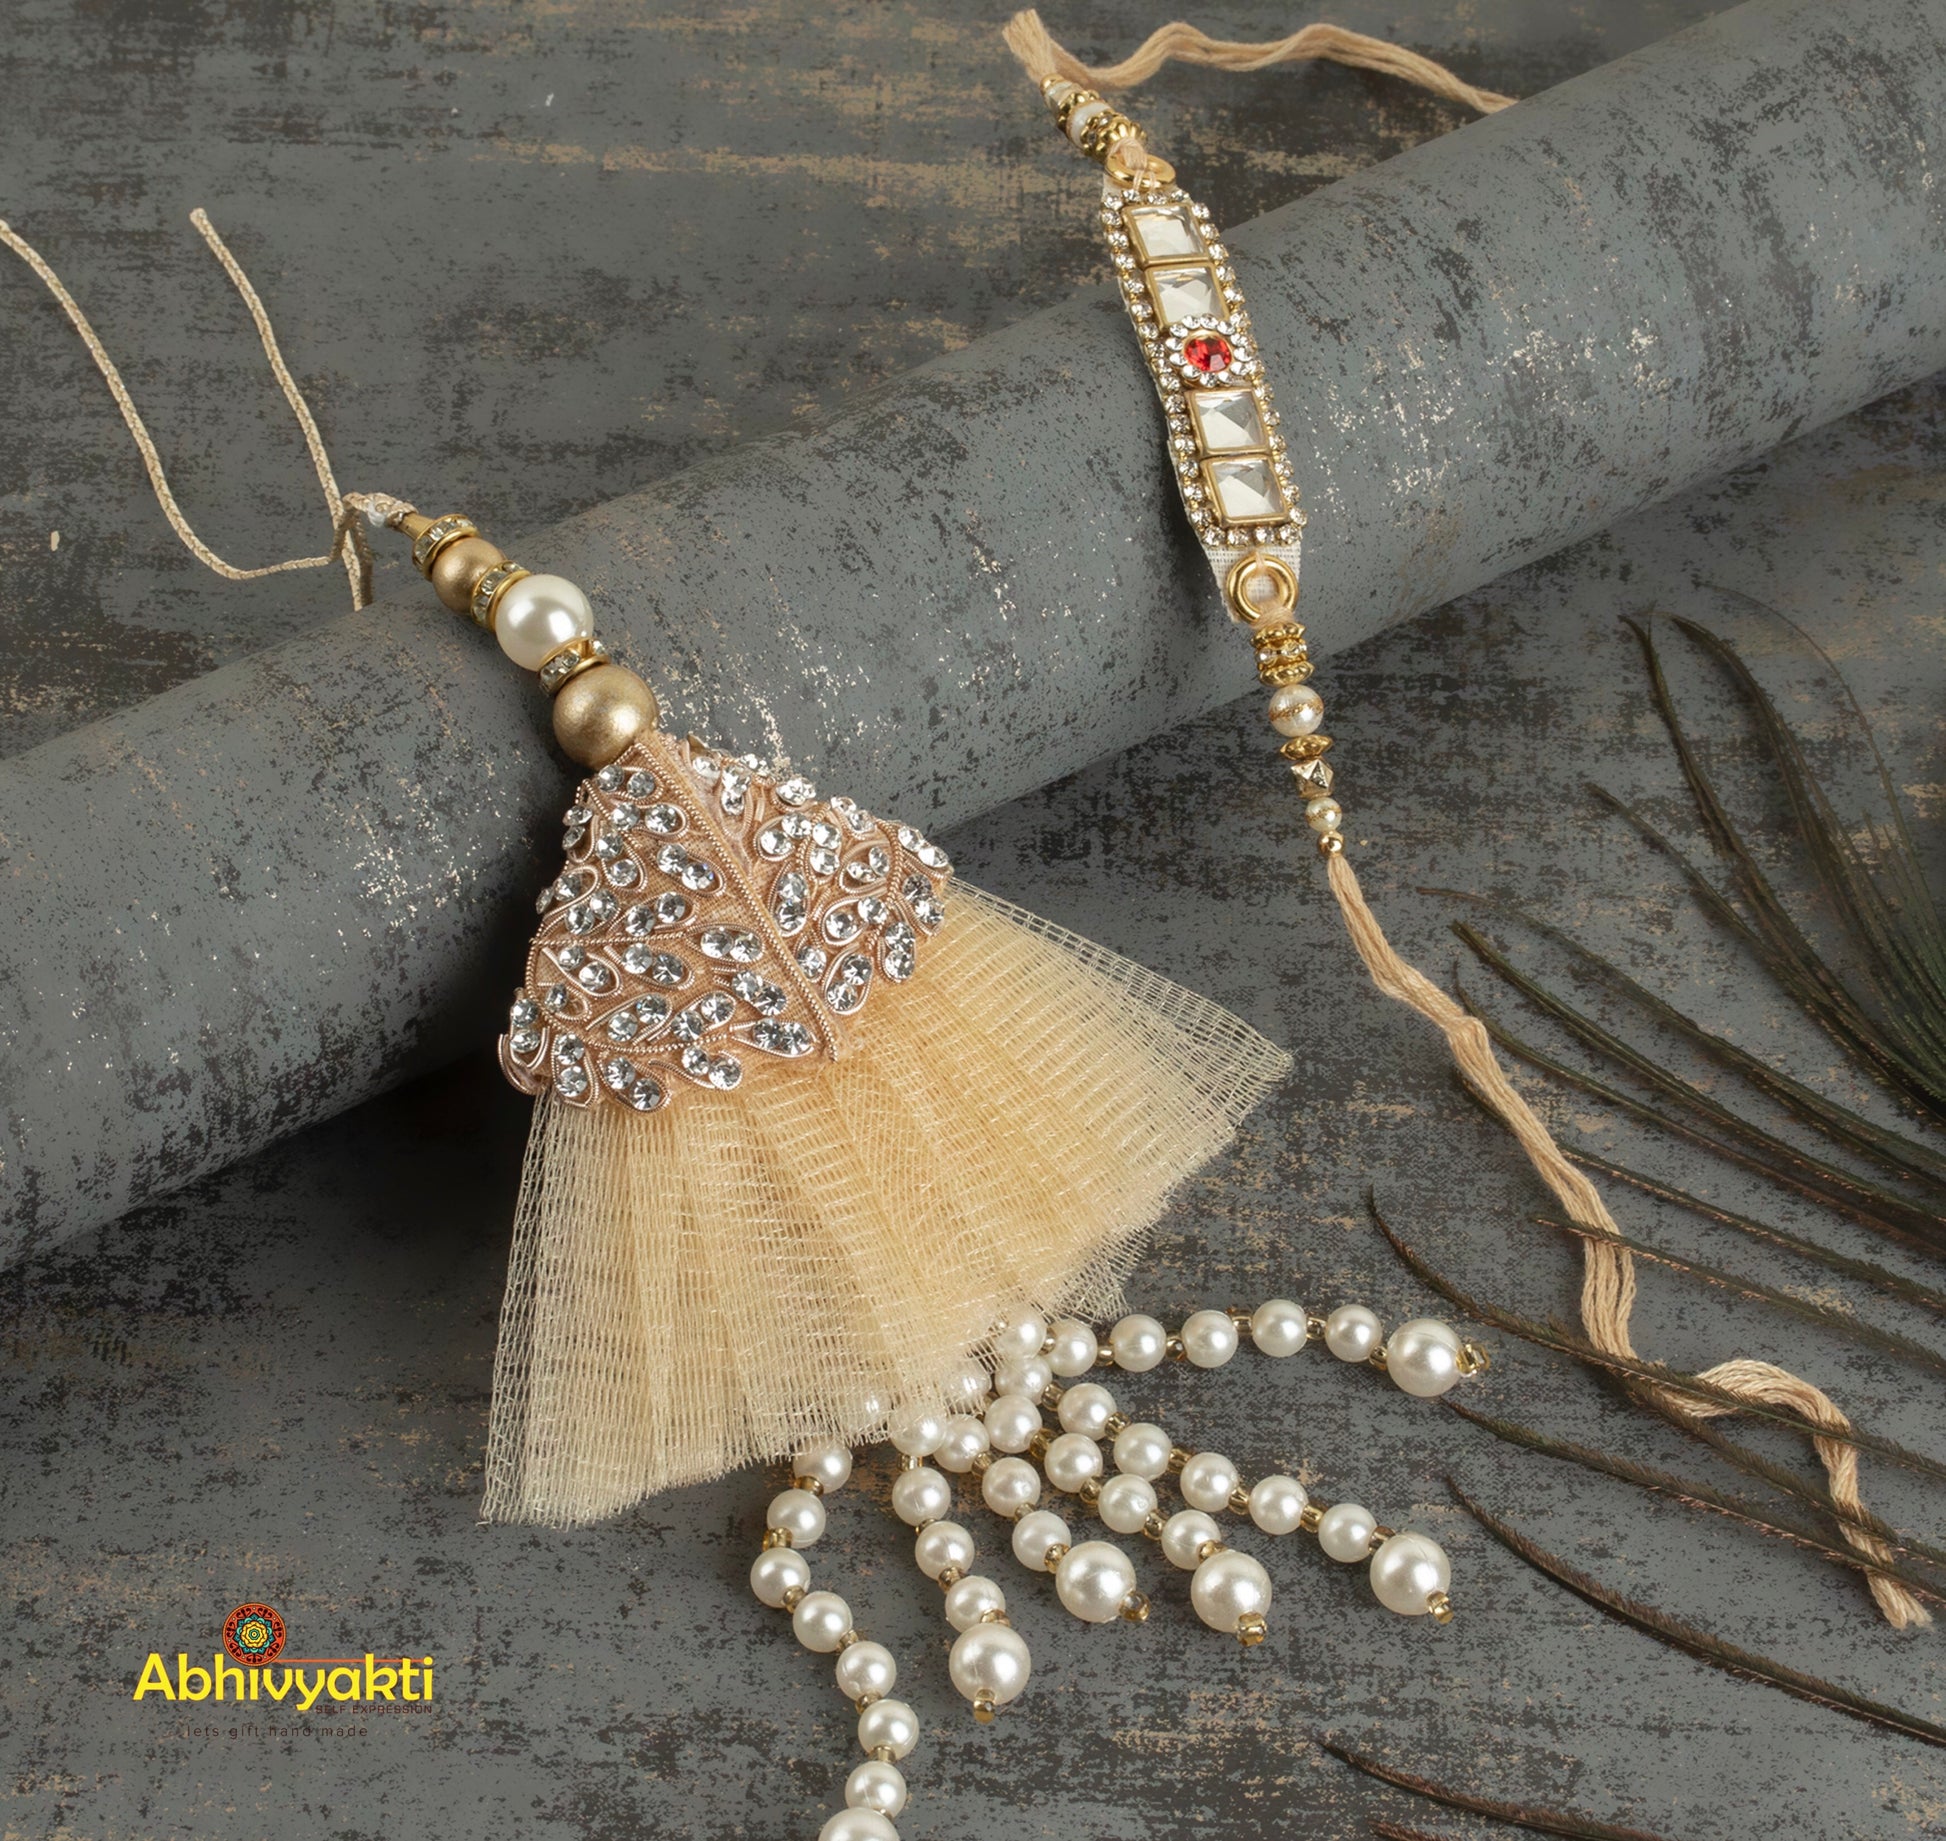 Beige tassel rakhi lumba adorned with pearls and beads.